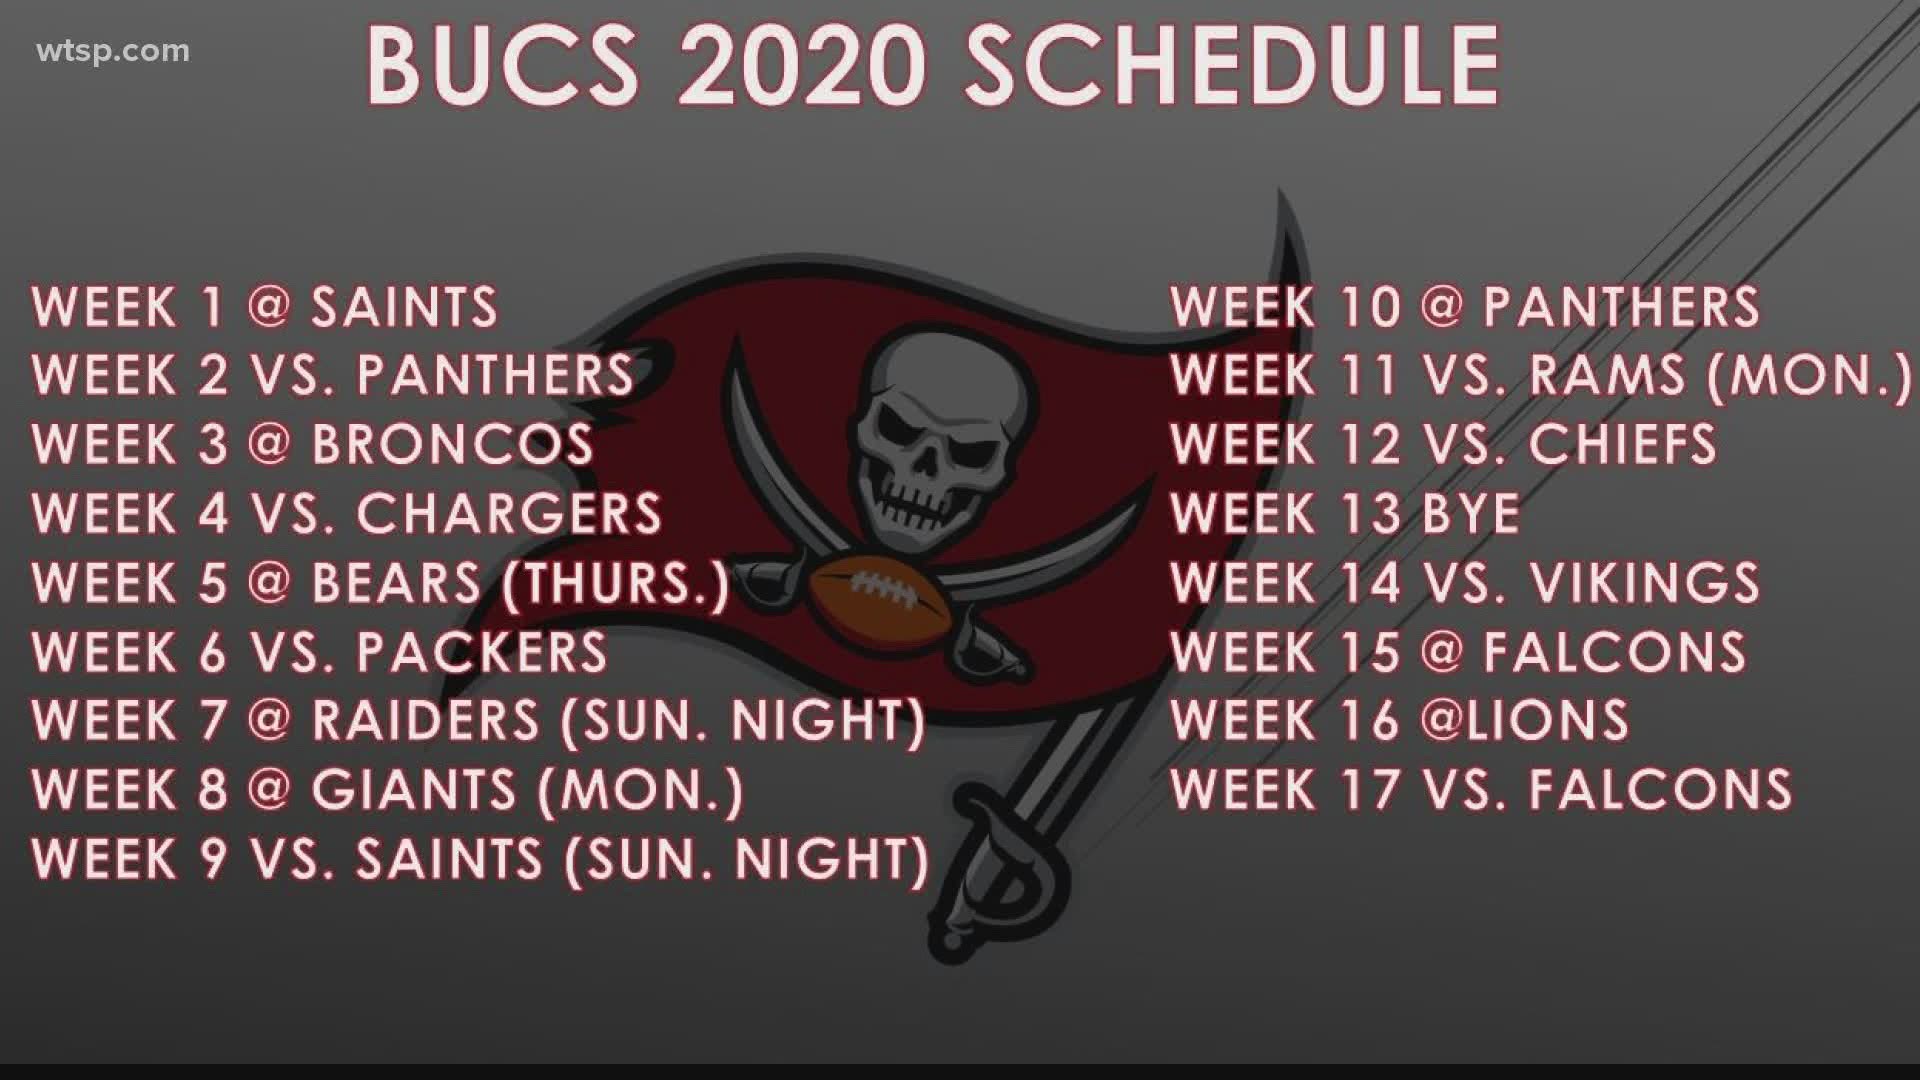 Tampa Bay Buccaneers: Bucs 2020 preseason schedule revealed